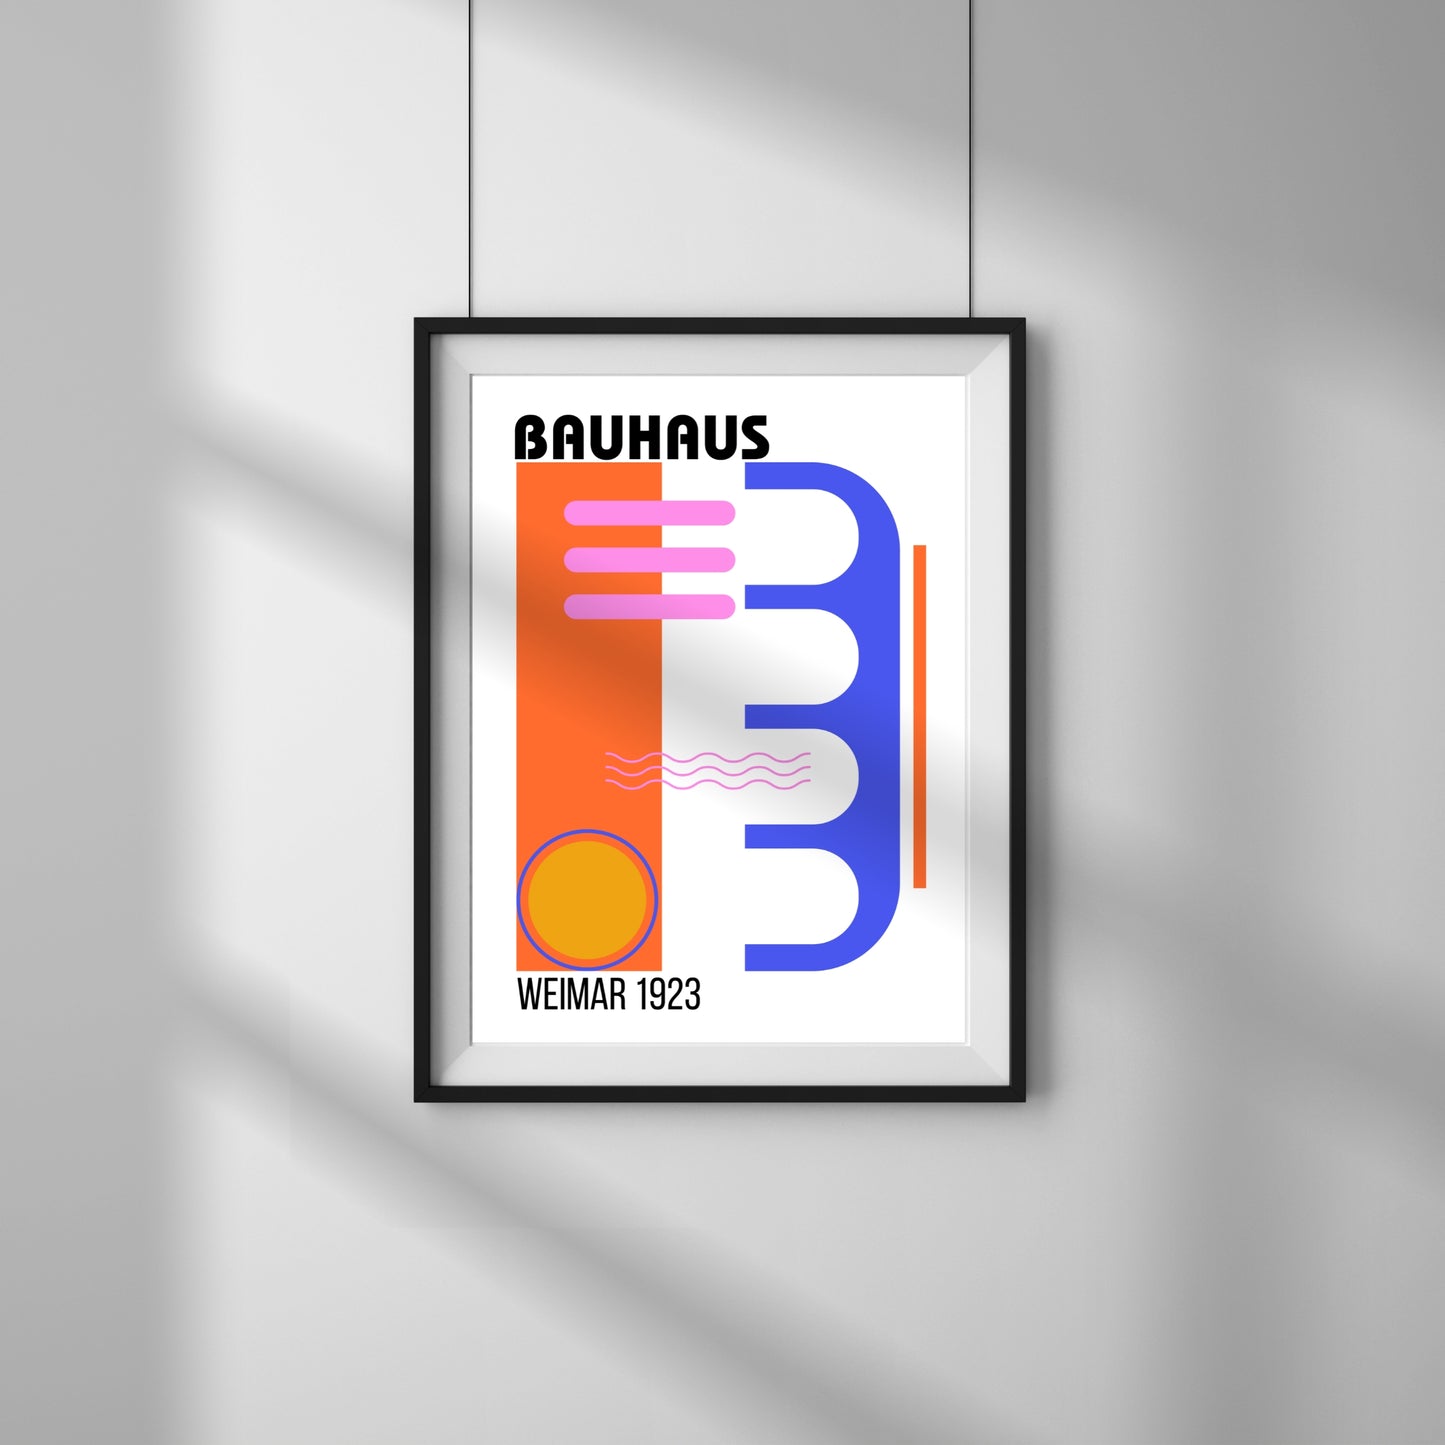 Bauhaus Exhibition Art Print, A3/A4/A5 Sizes